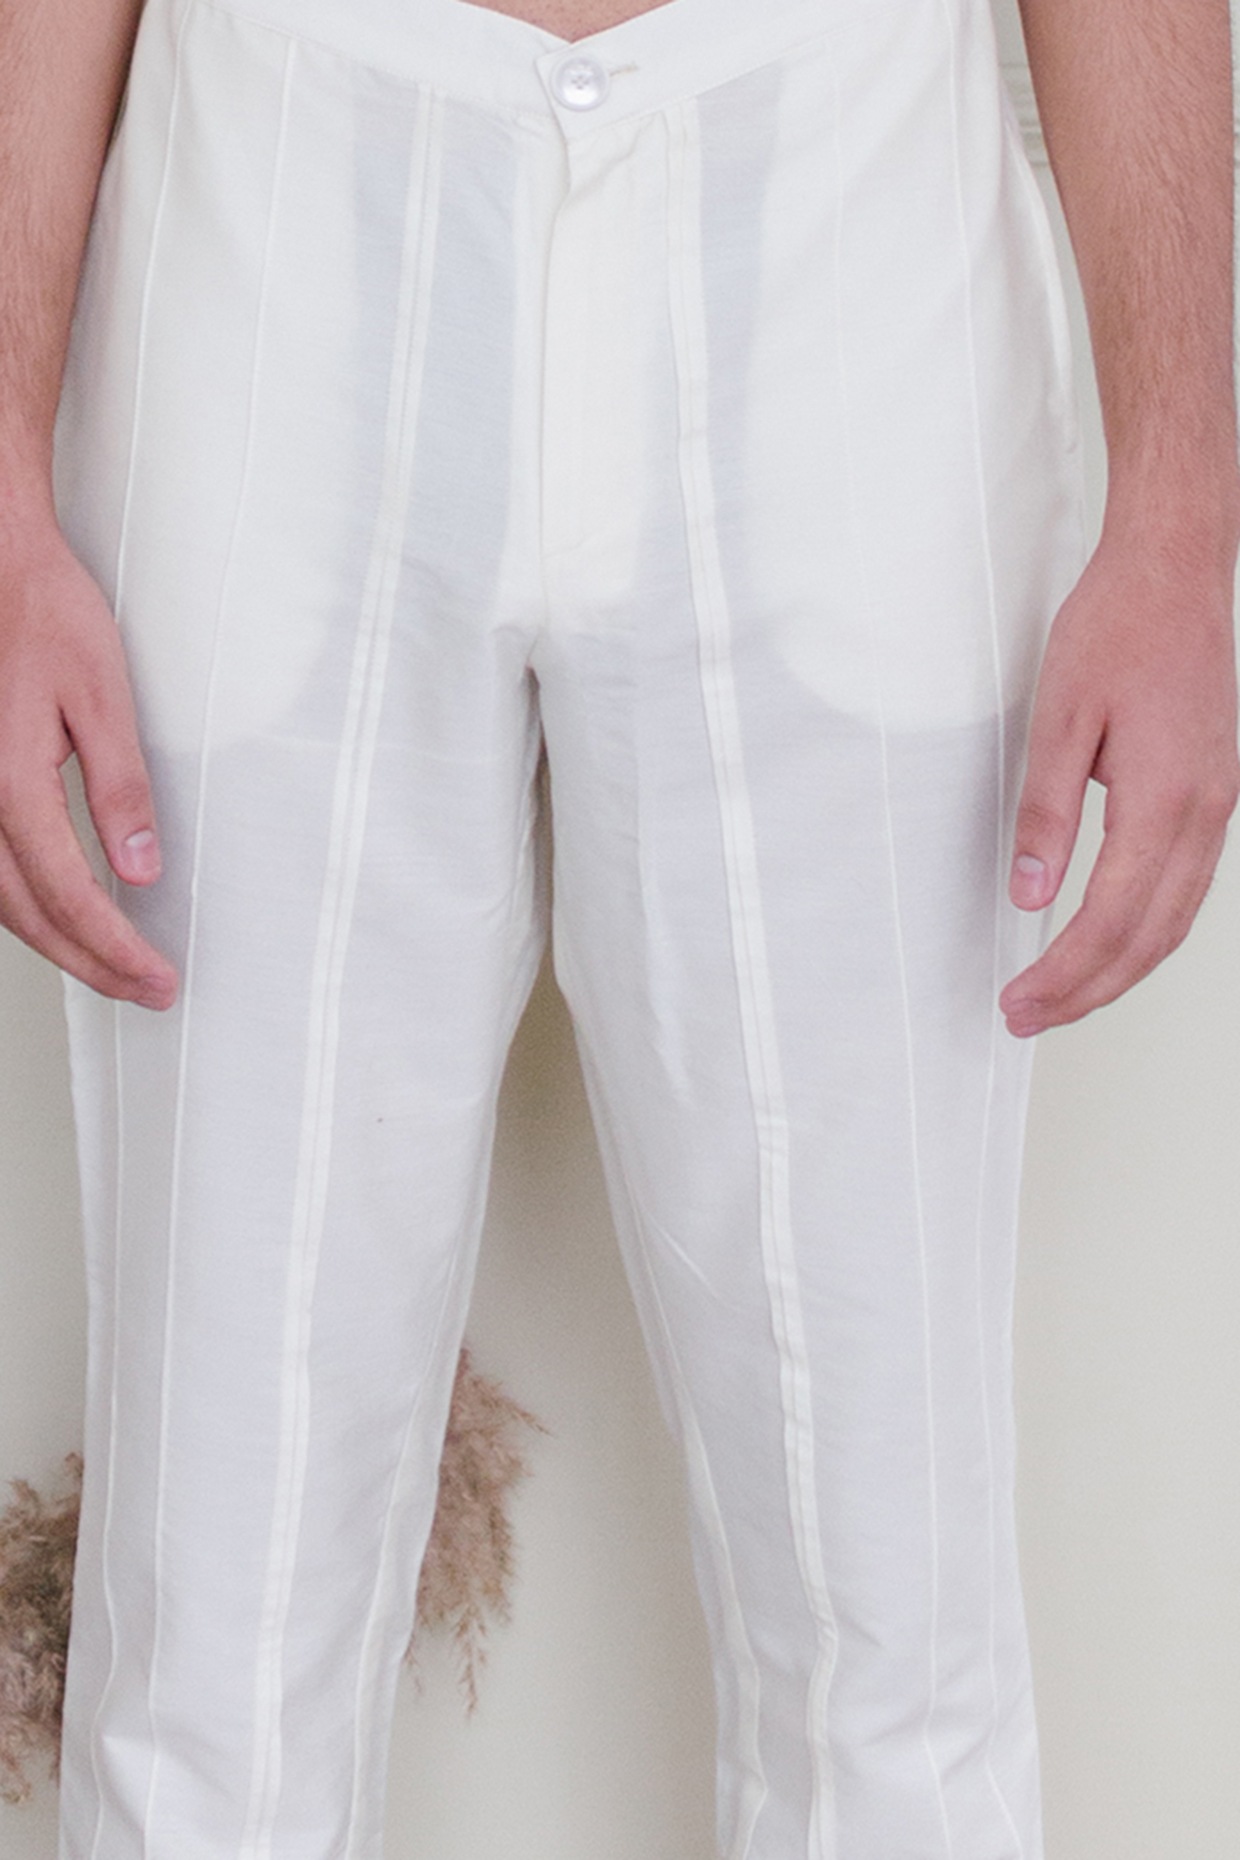 Buy Off White Achkan With Pants In Chanderi Silk by Designer ARJAN DUGAL  Online at Ogaancom